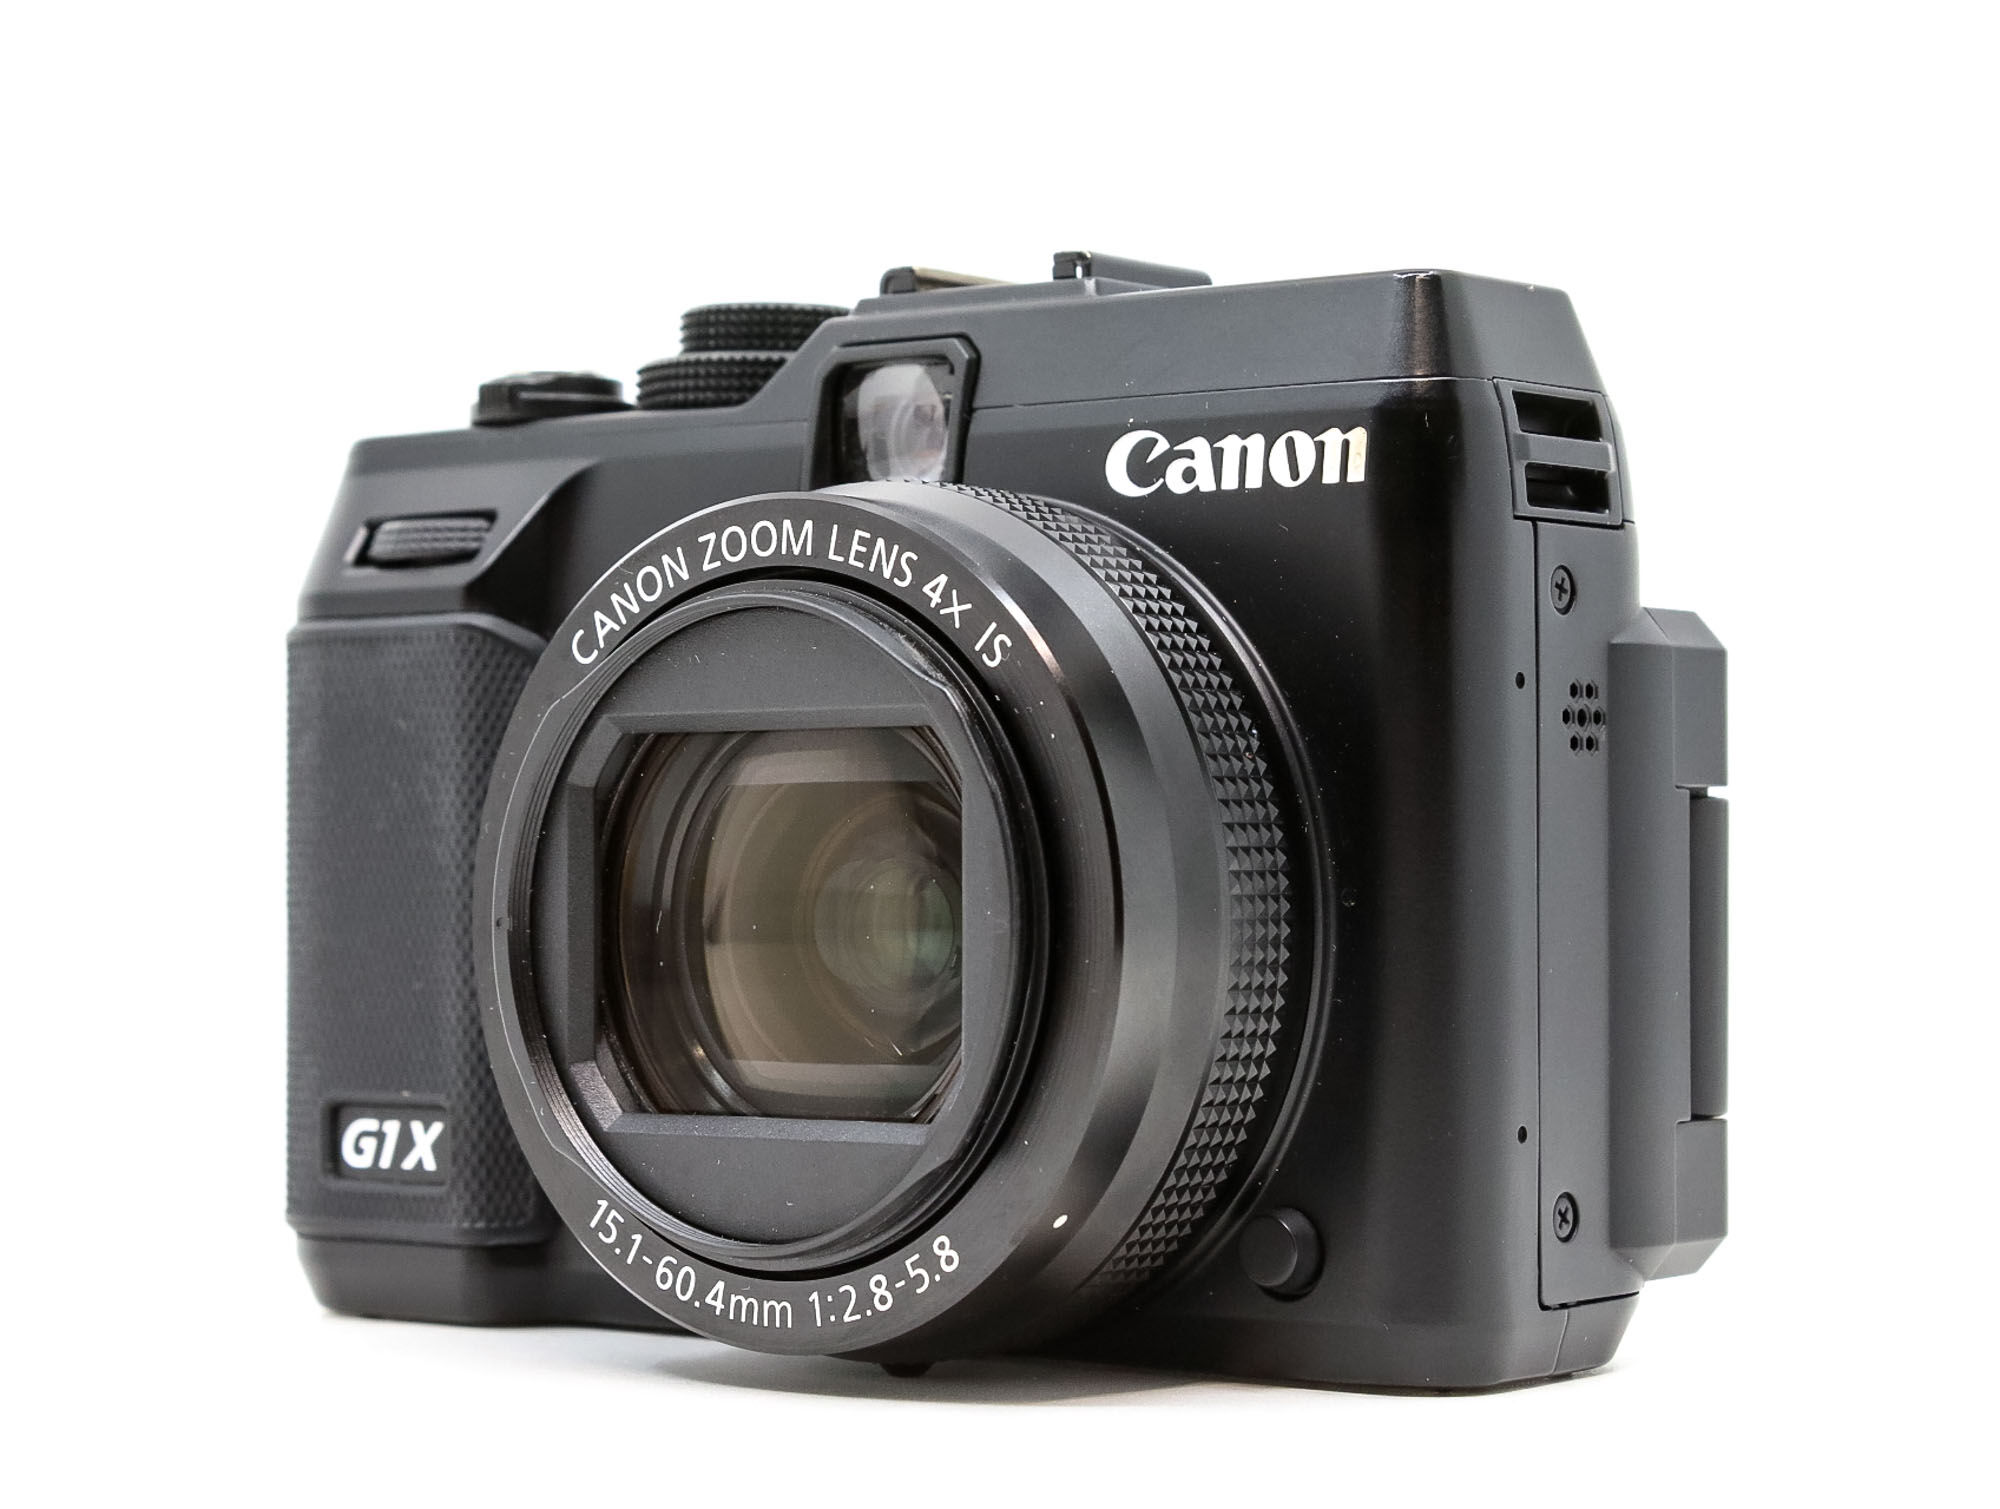 Canon PowerShot G1X (Condition: Excellent)